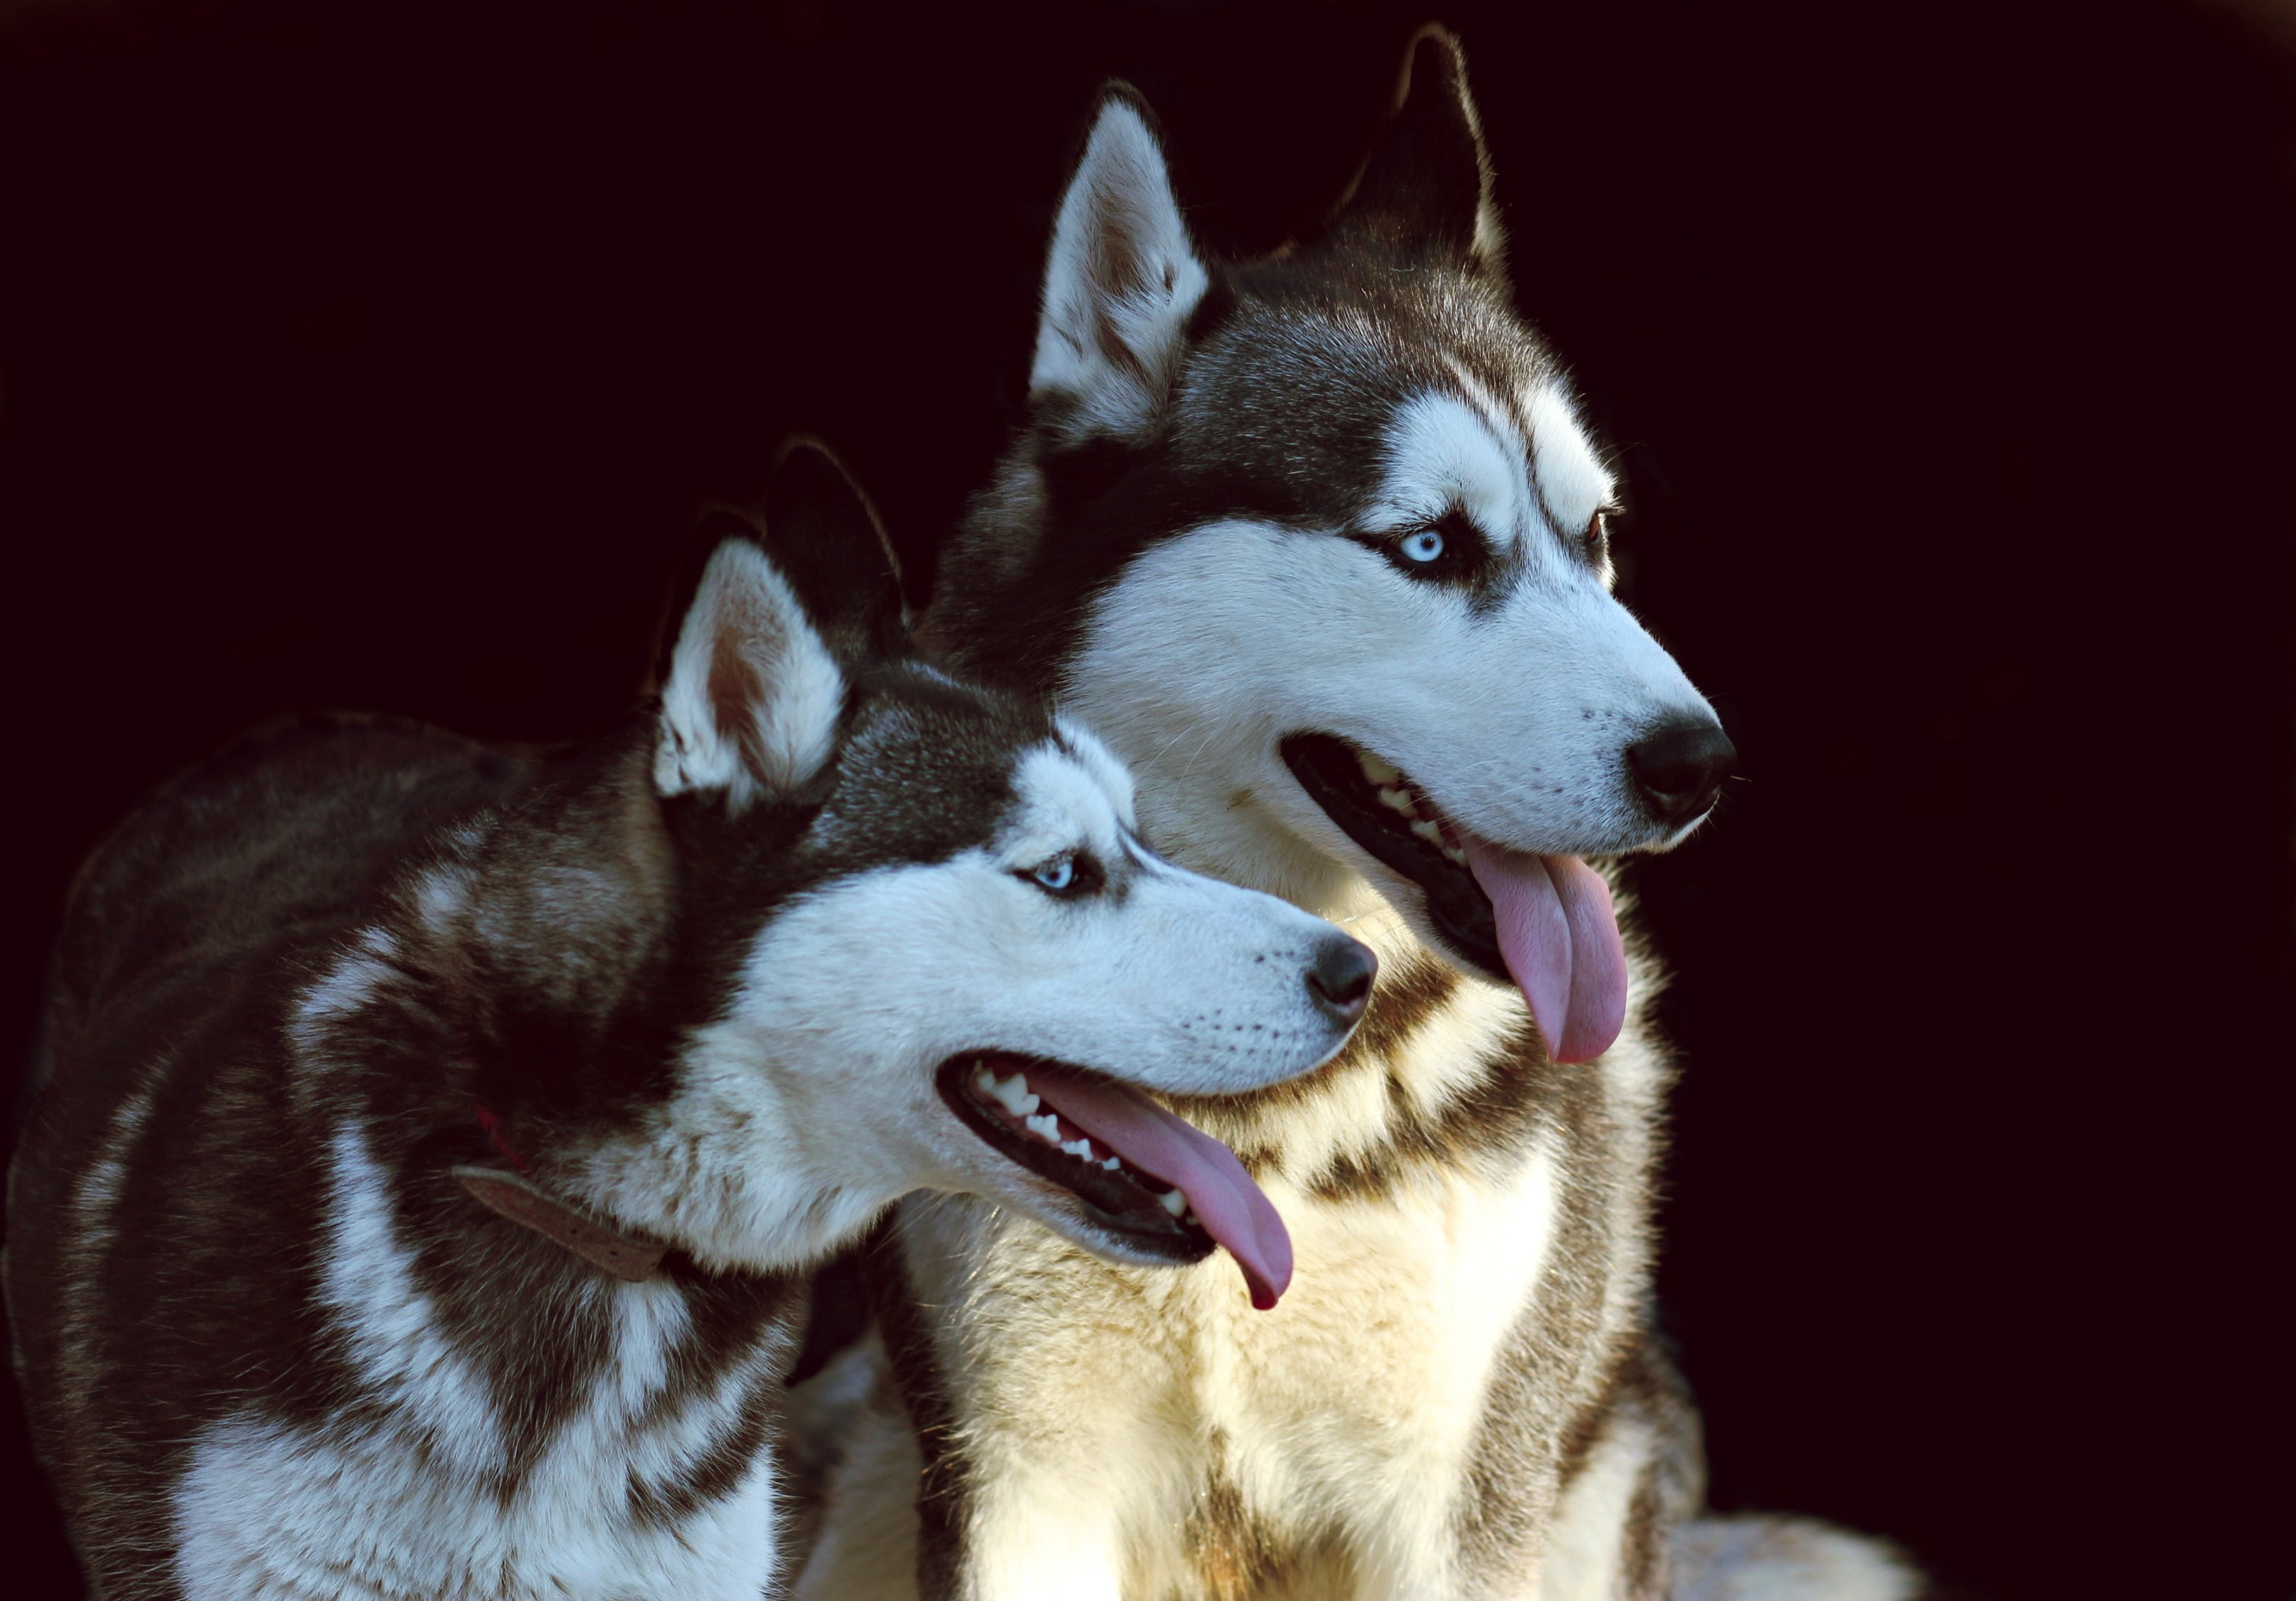 husky, dog, protruding tongue, dogs, couple, canine, pets, domestic